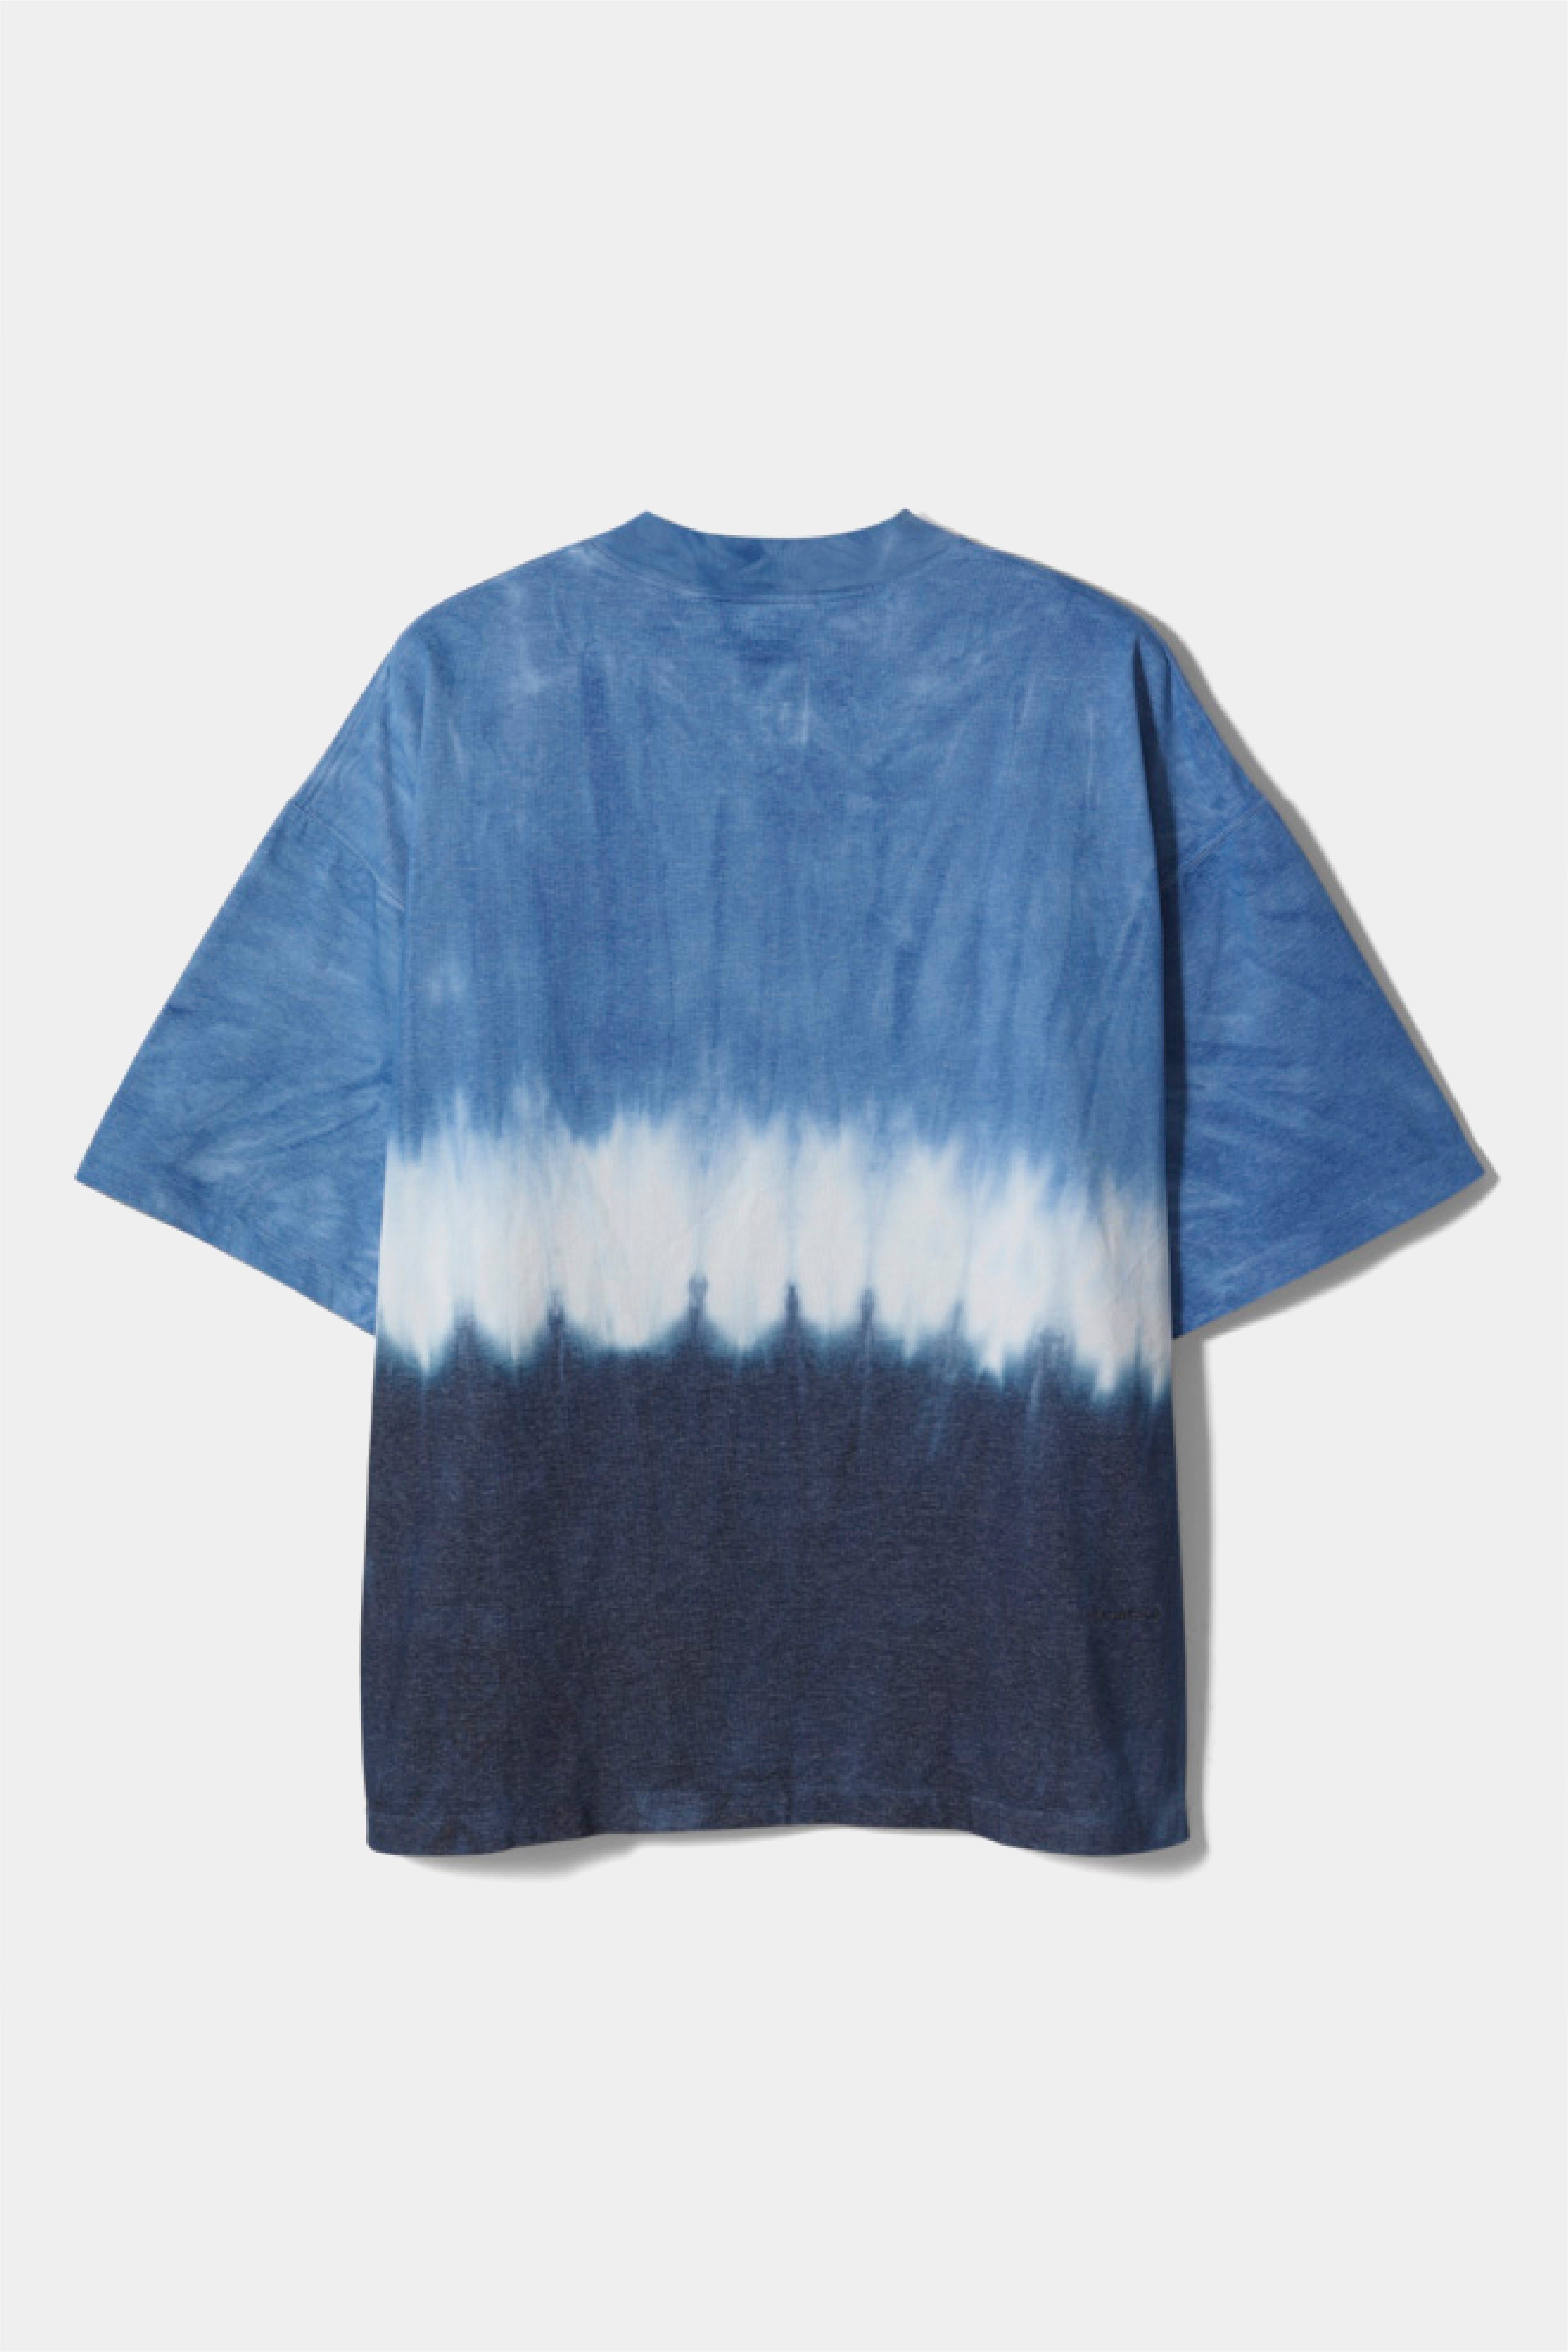 Selectshop FRAME - NANAMICA OOAL Hand Dyed Tee T-Shirts Concept Store Dubai